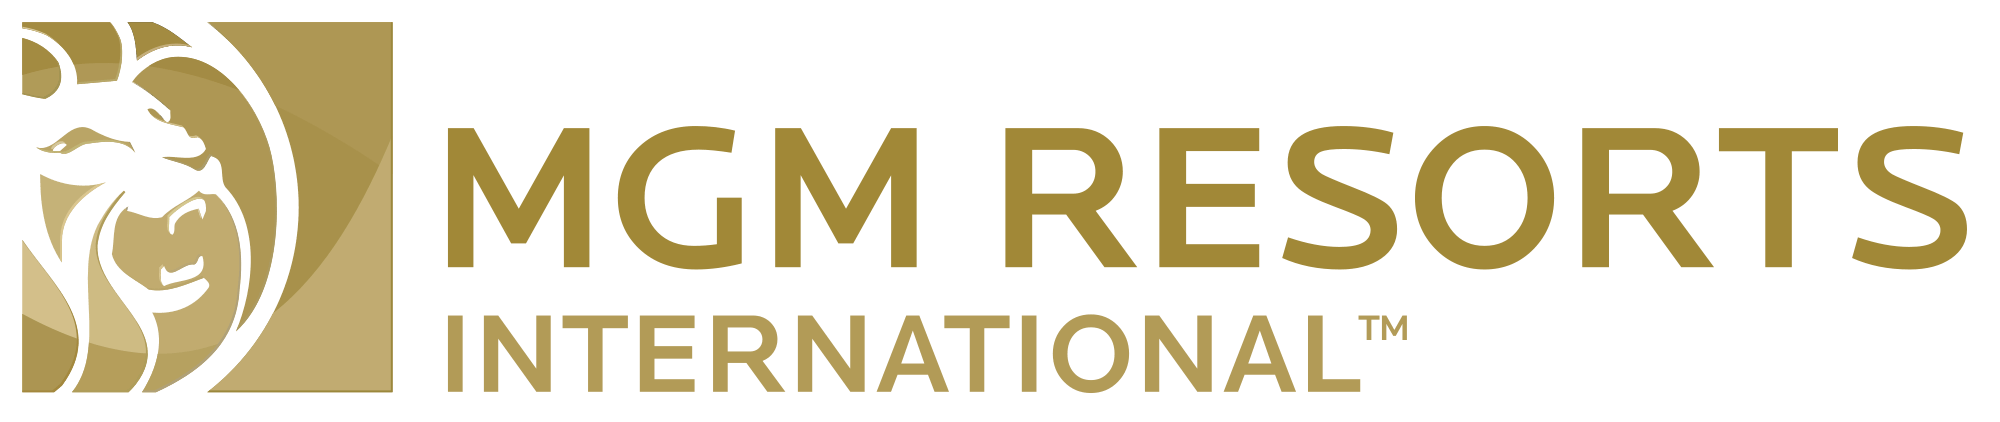 mgmresorts-international-logo-s